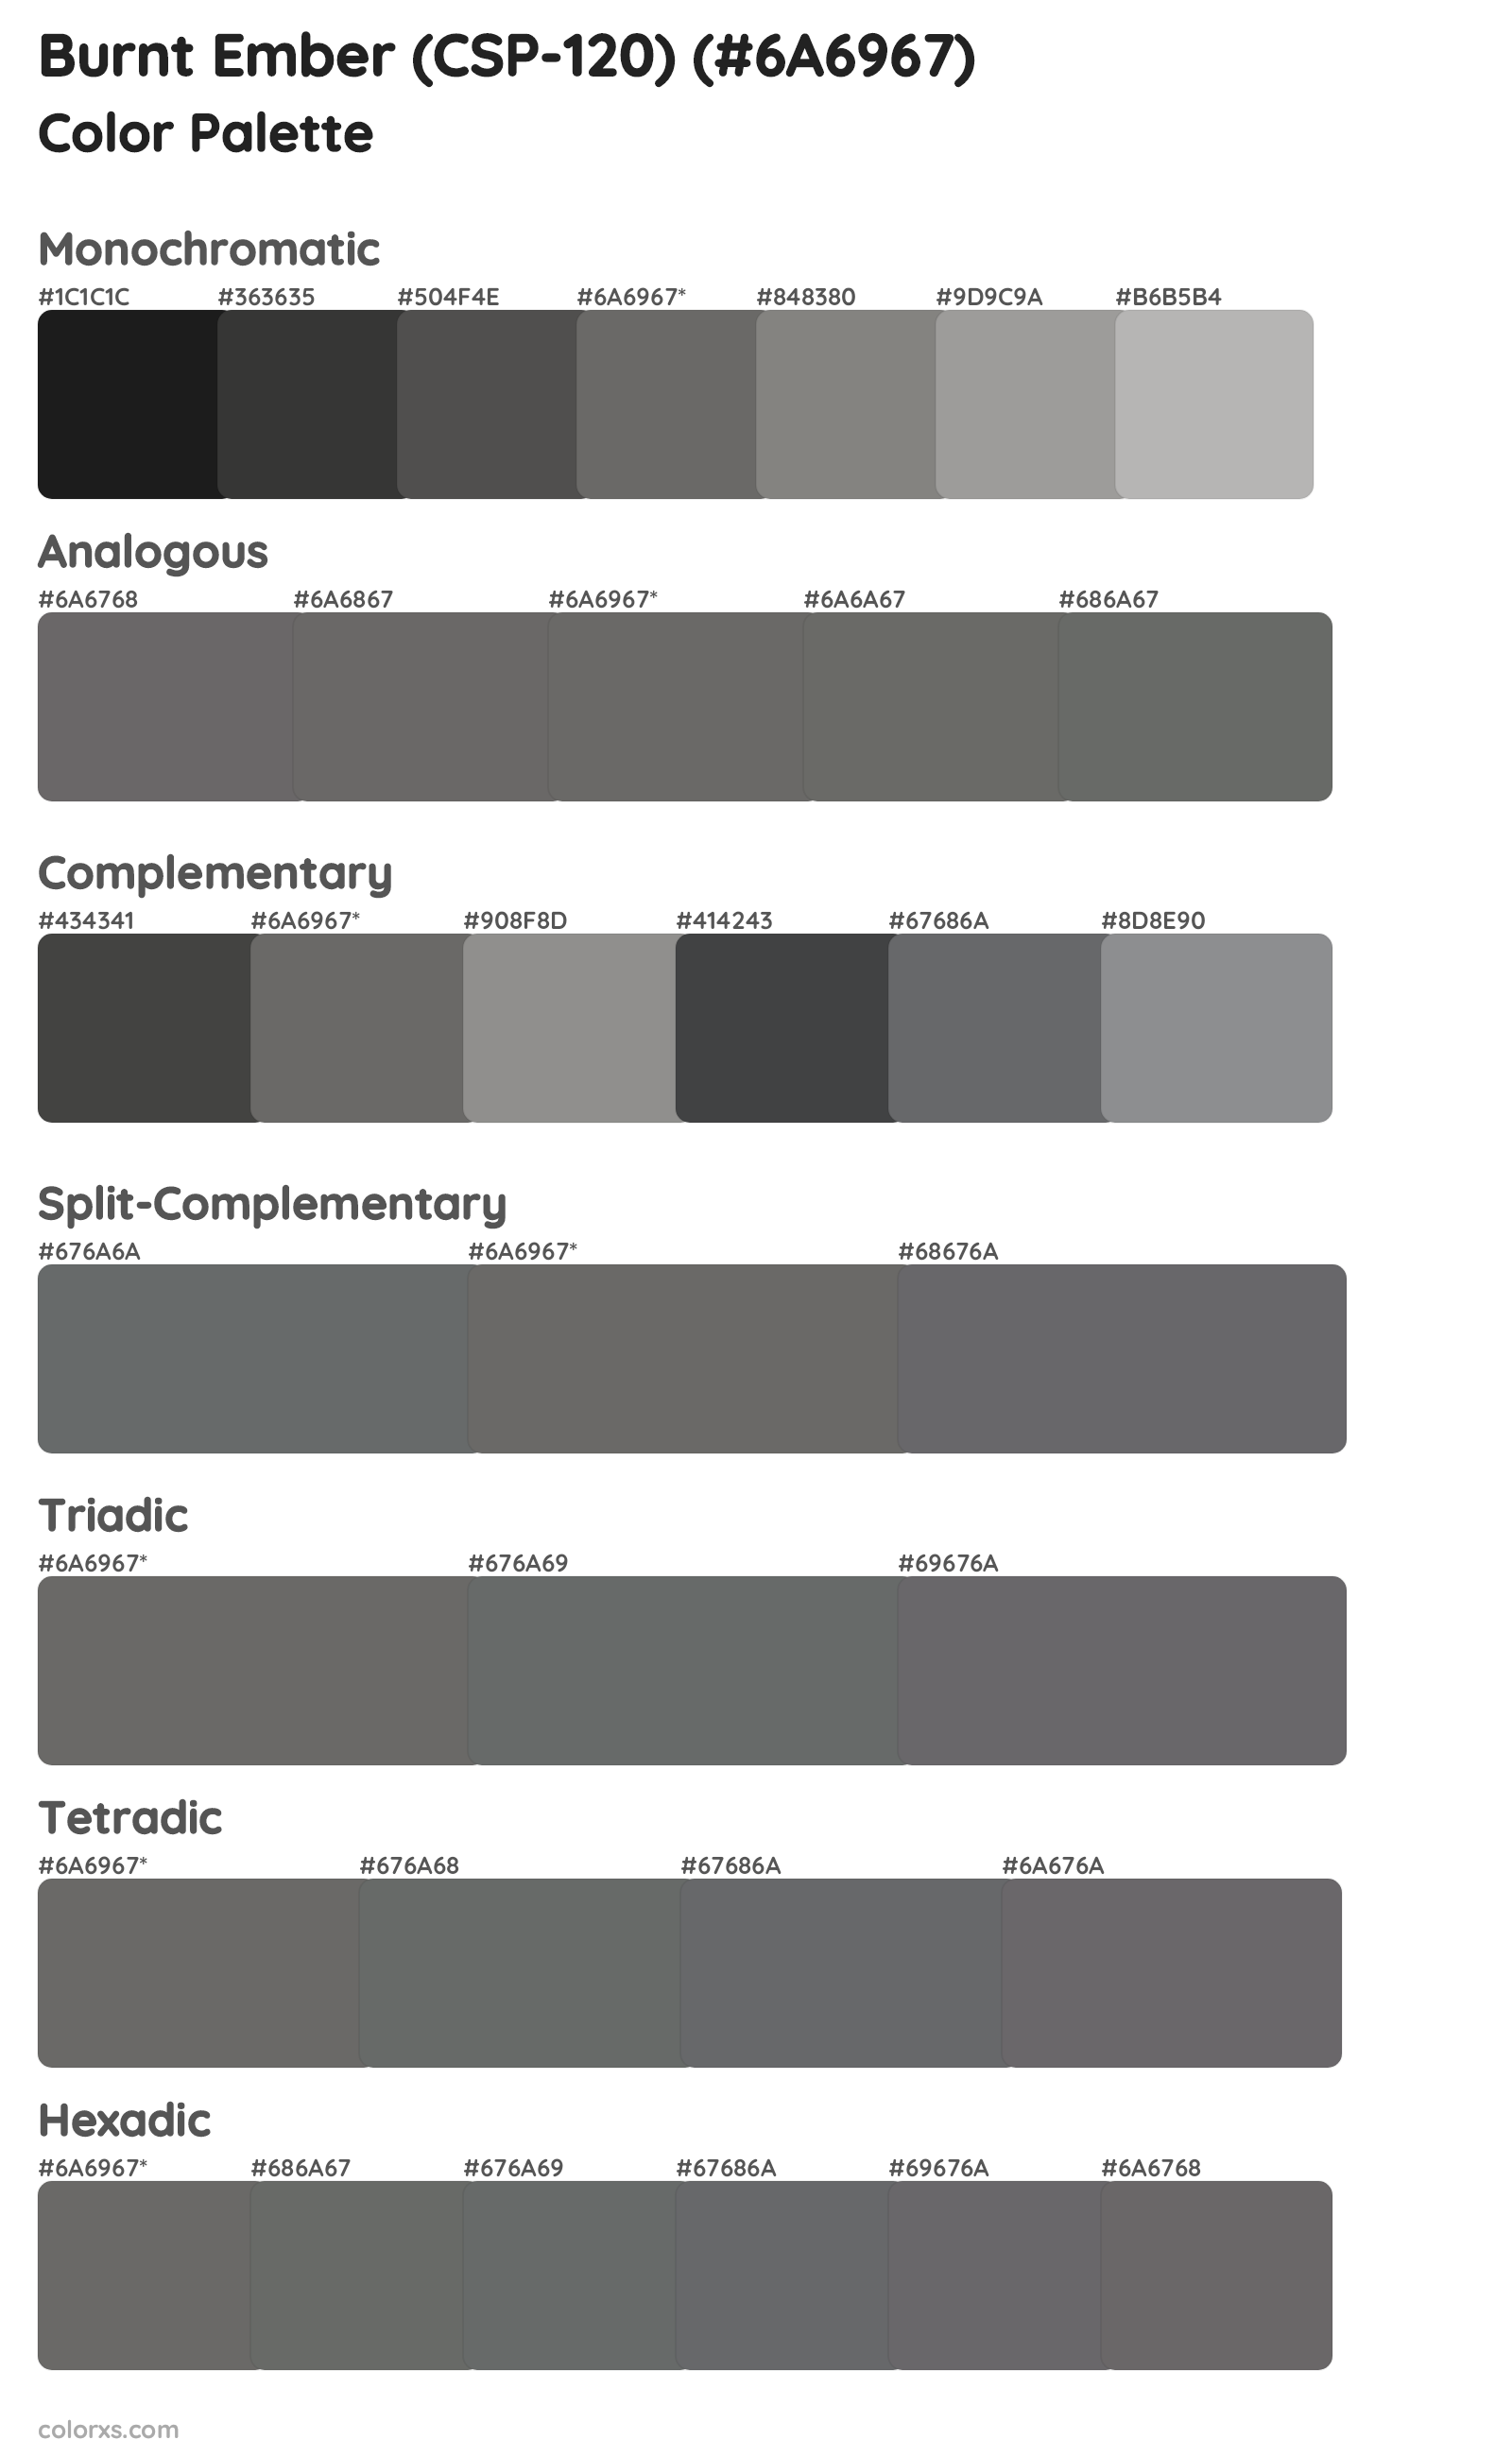 Burnt Ember (CSP-120) Color Scheme Palettes